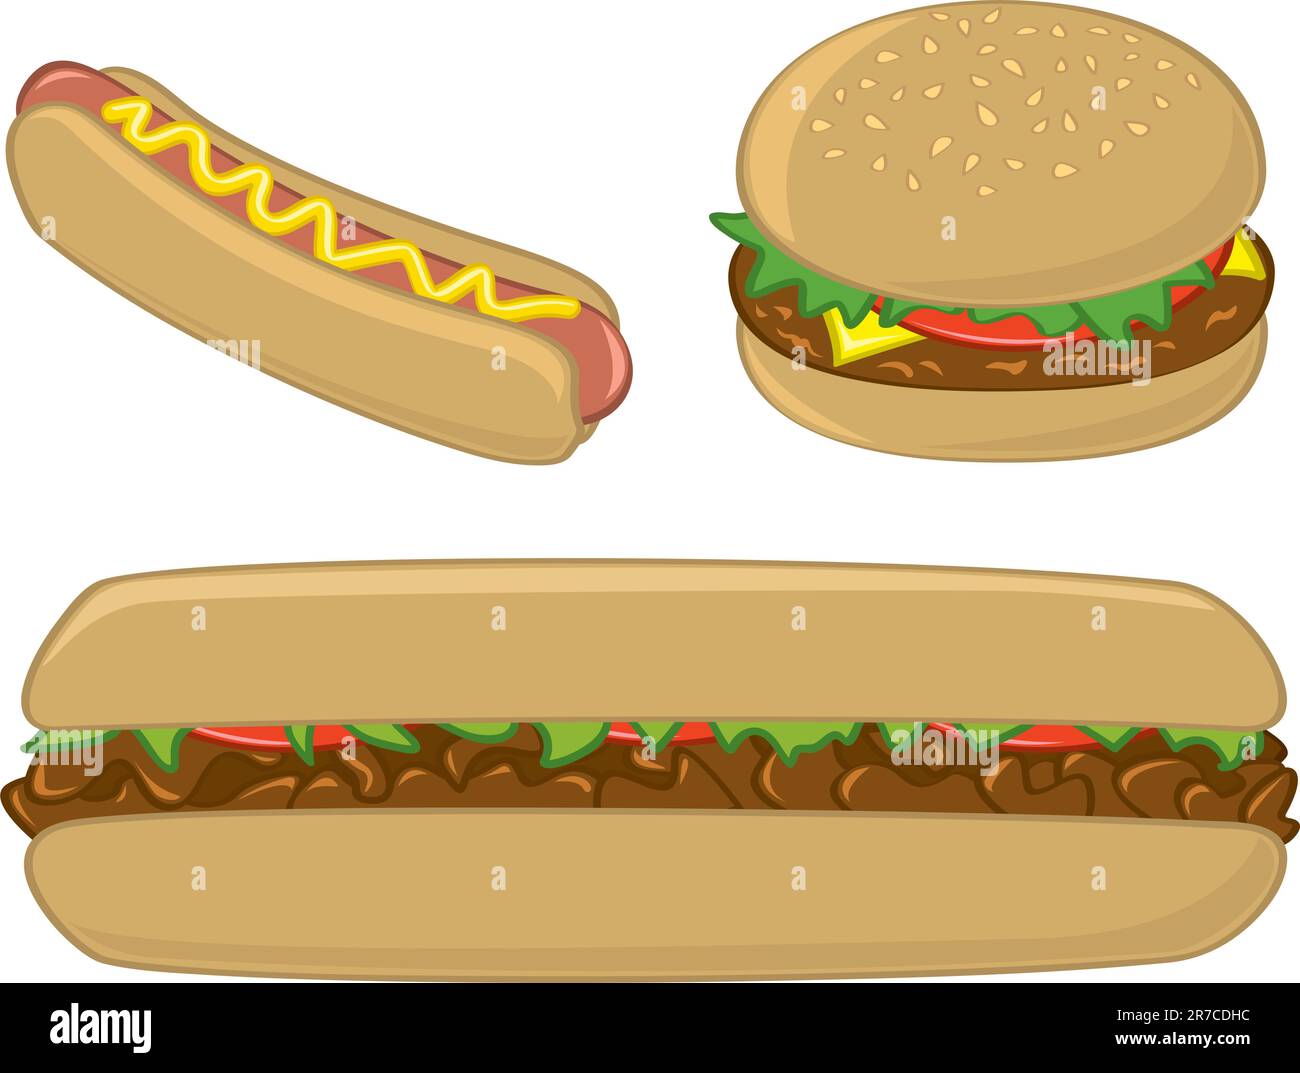 Three common American fast food sandwich items - a hot dog, hamburger and steak submarine. Stock Vector